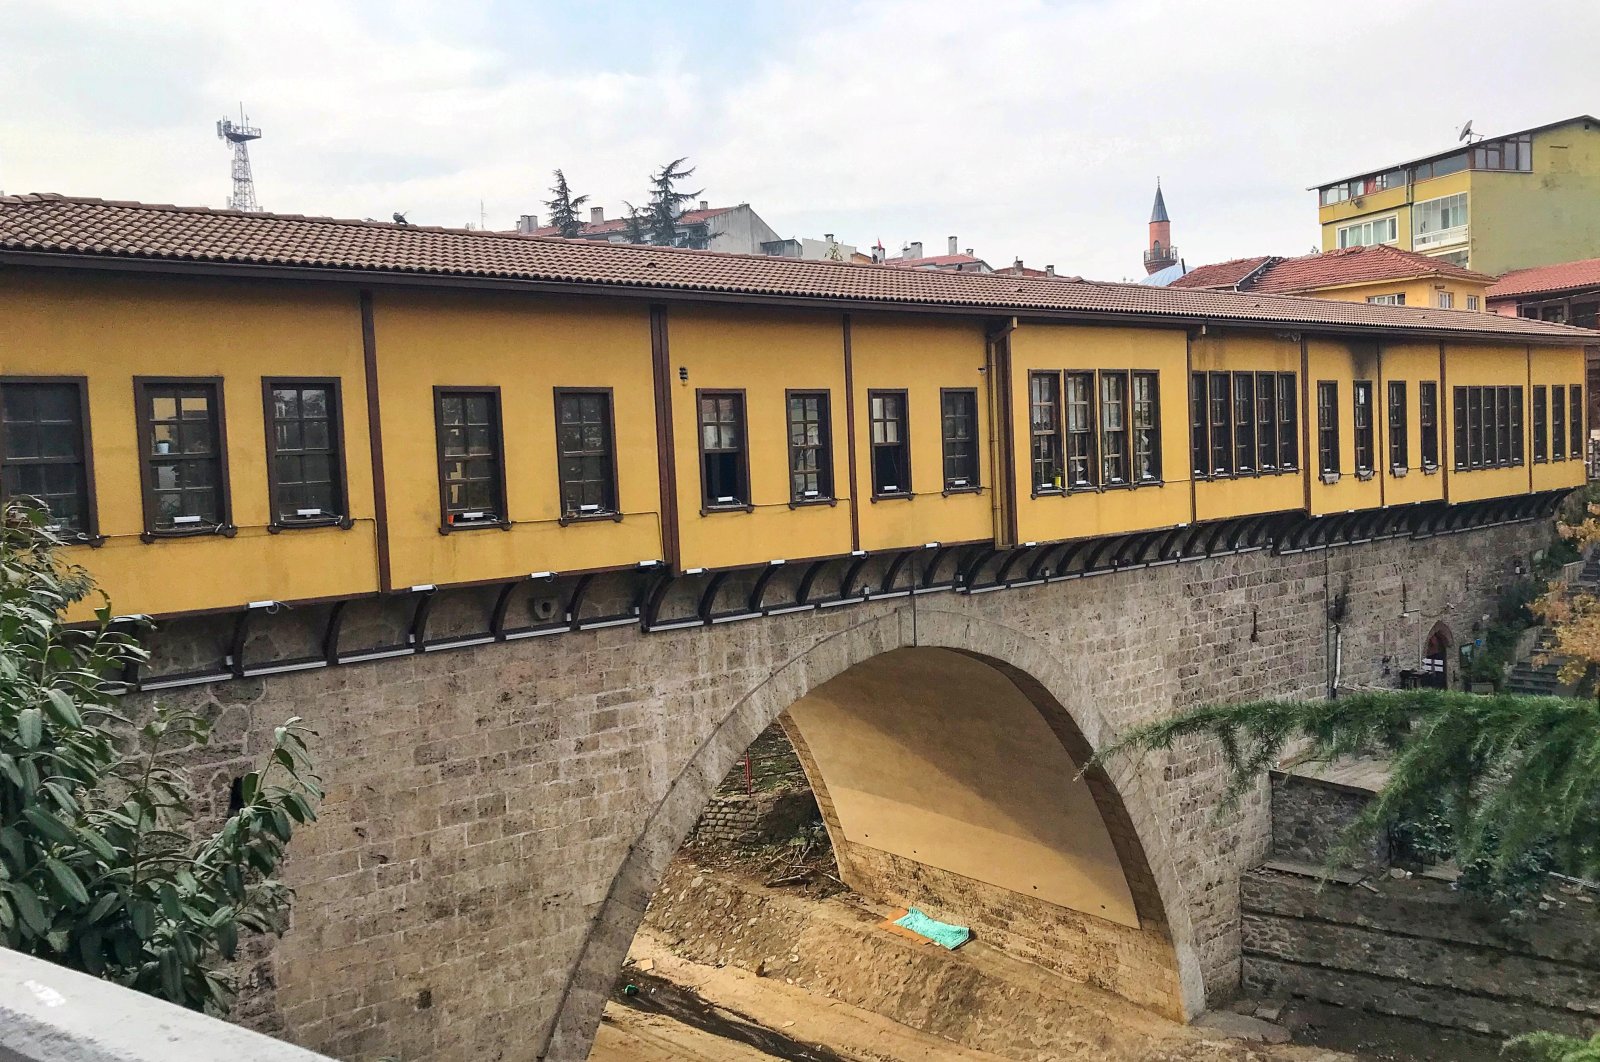 Jembatan pasar tertua di dunia: Irgandı, Ponte Vecchio Türkiye